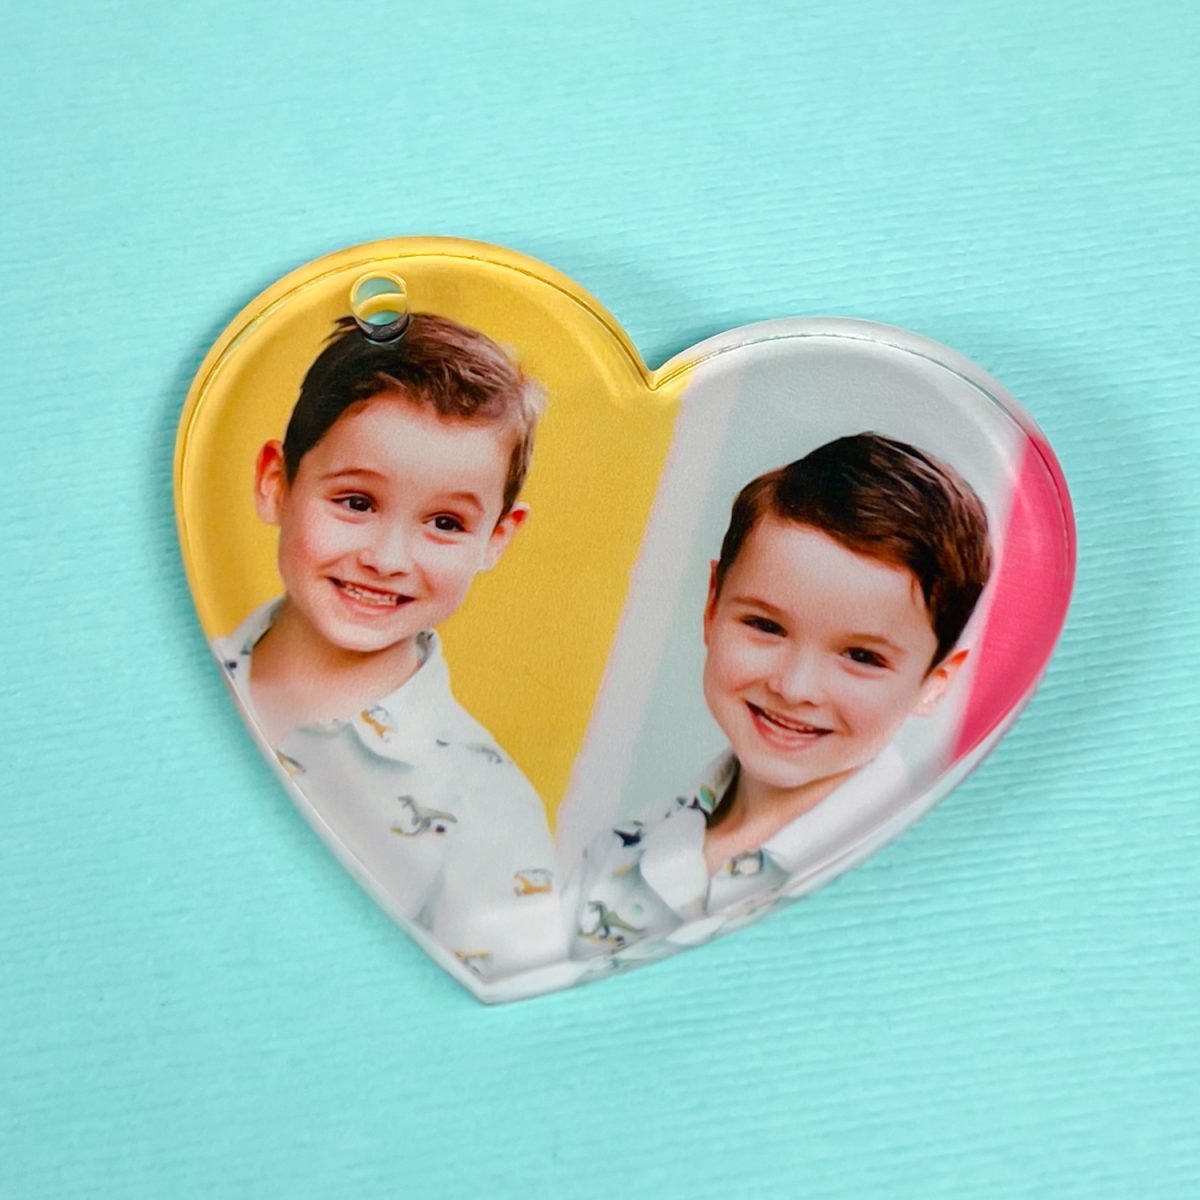 Acrylic keychain with photo of twin boys